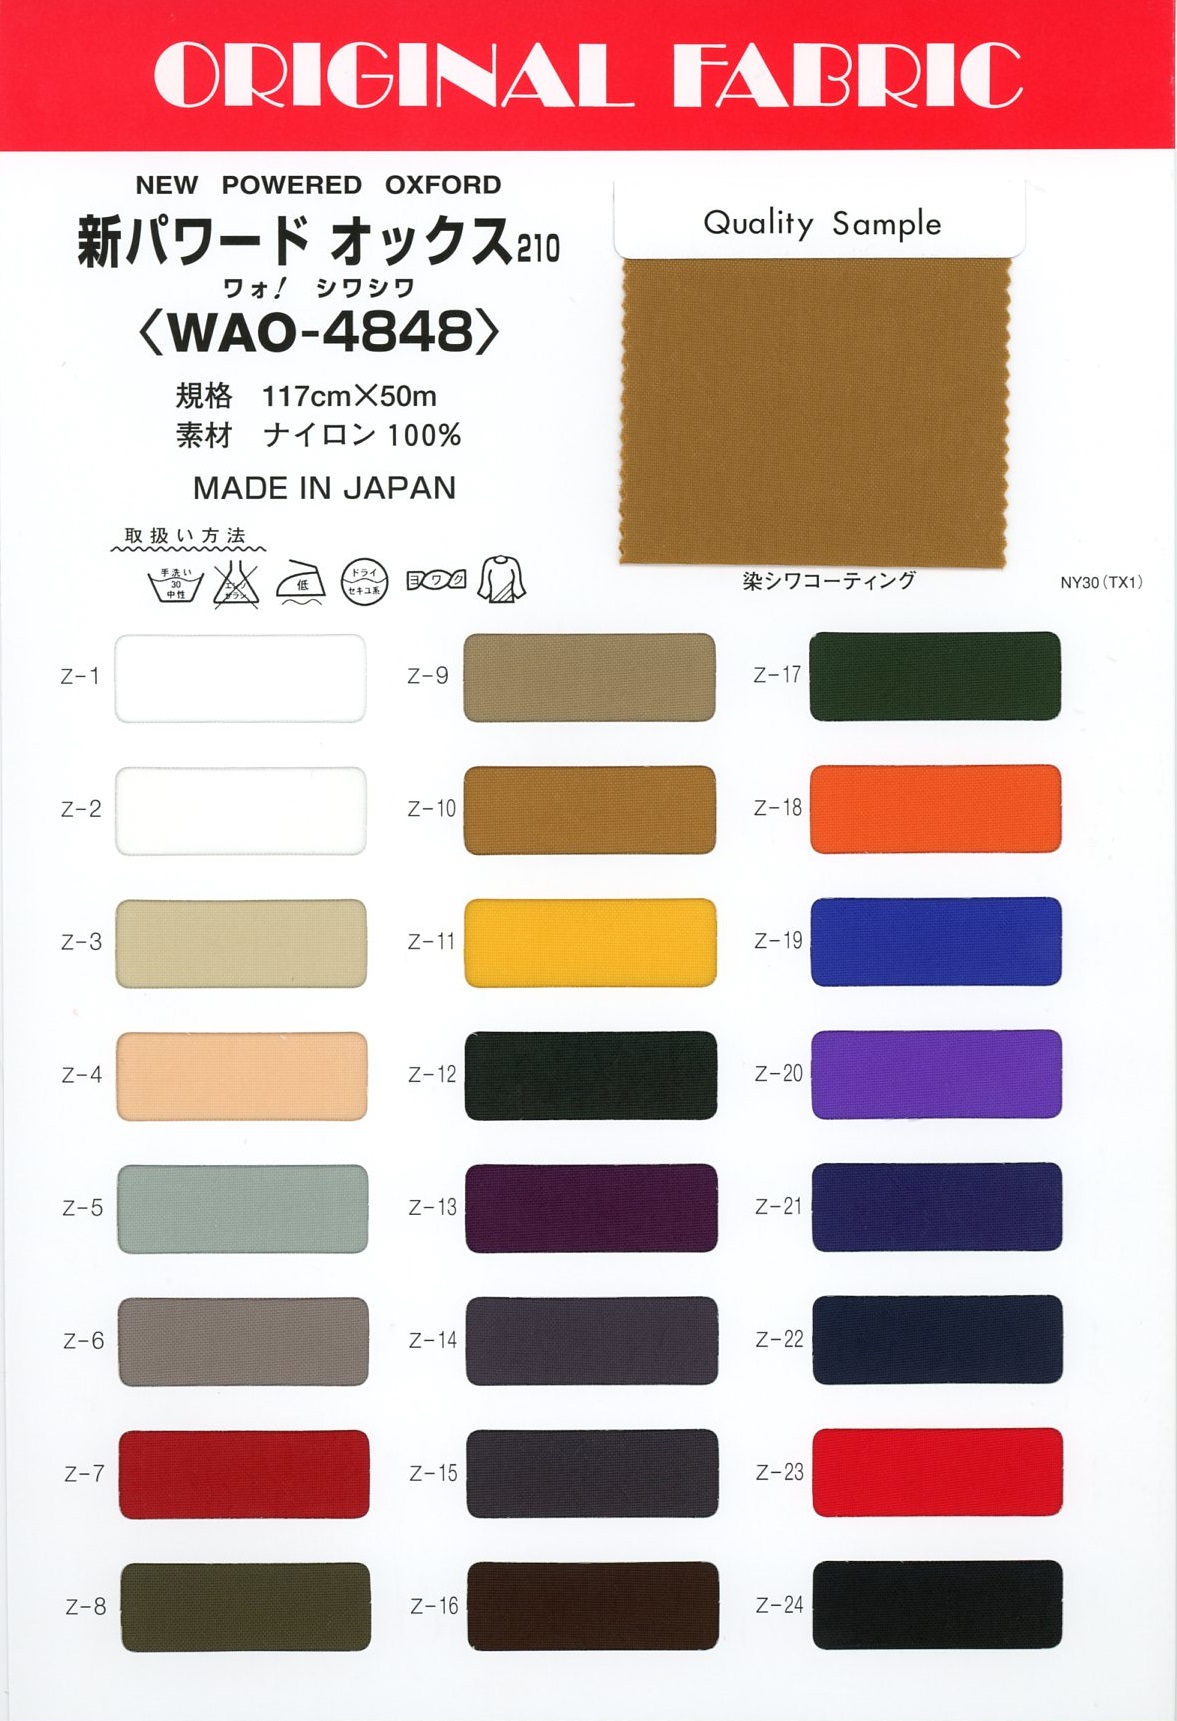 WAO-4848 New Powered Oxford 210[Textile / Fabric] Masuda